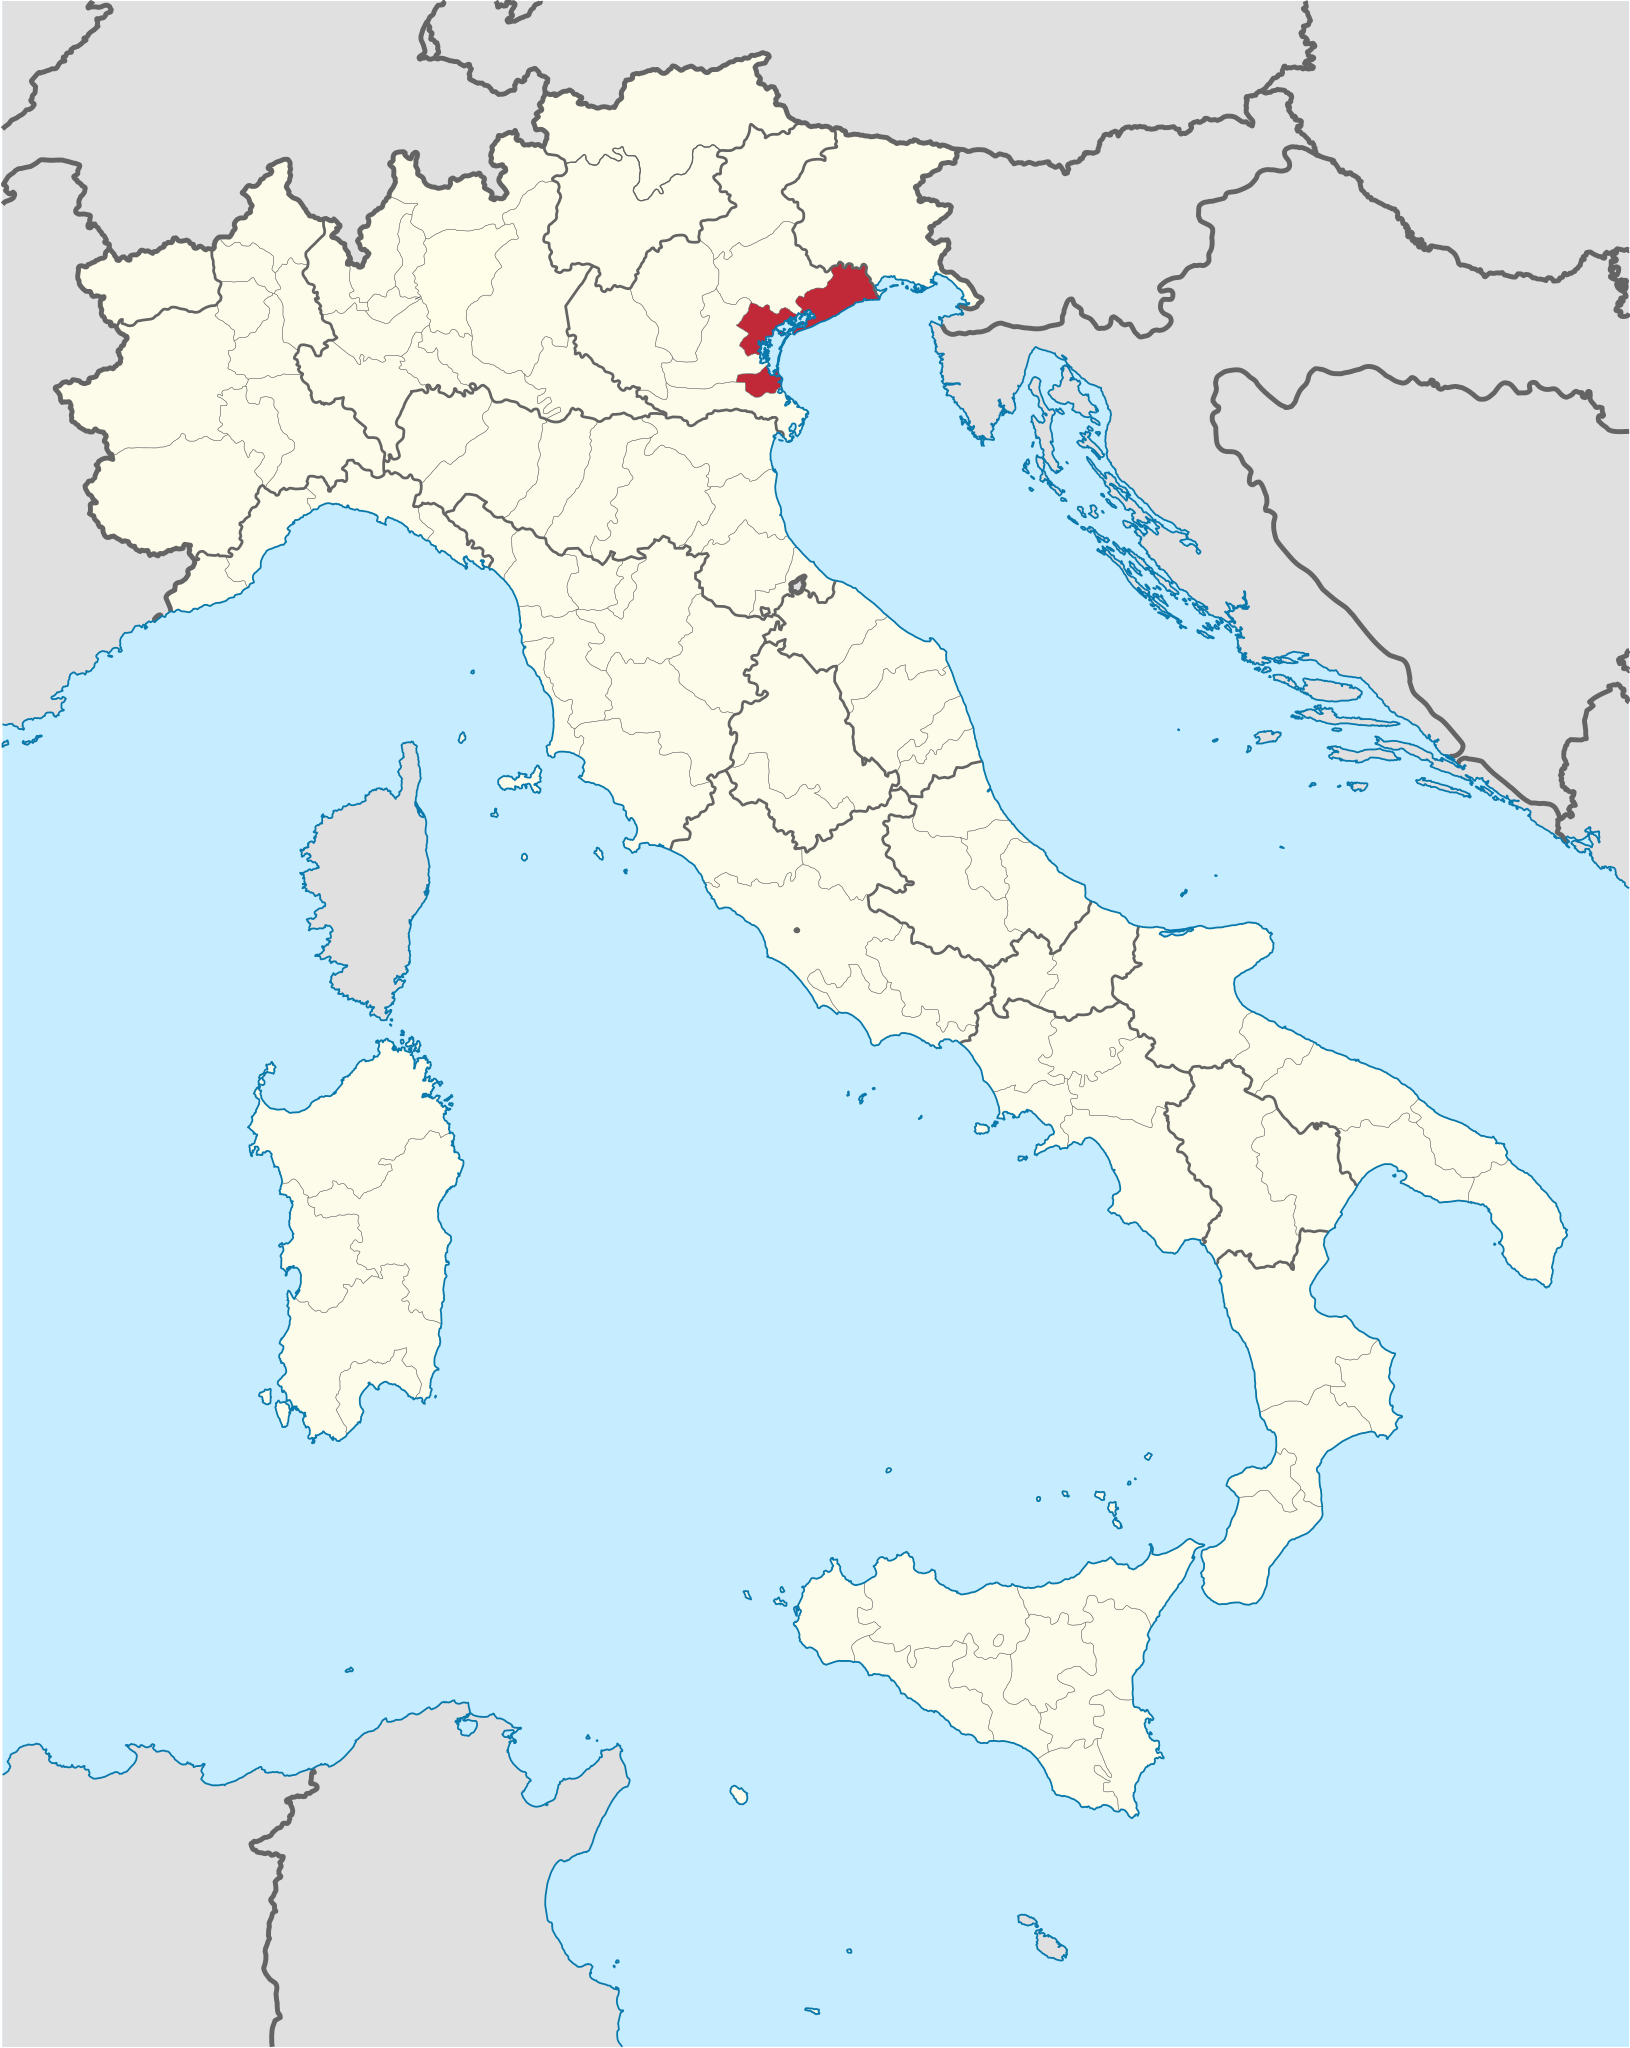 File:Vaporetto-venezia-linea 1.JPG - Wikimedia Commons